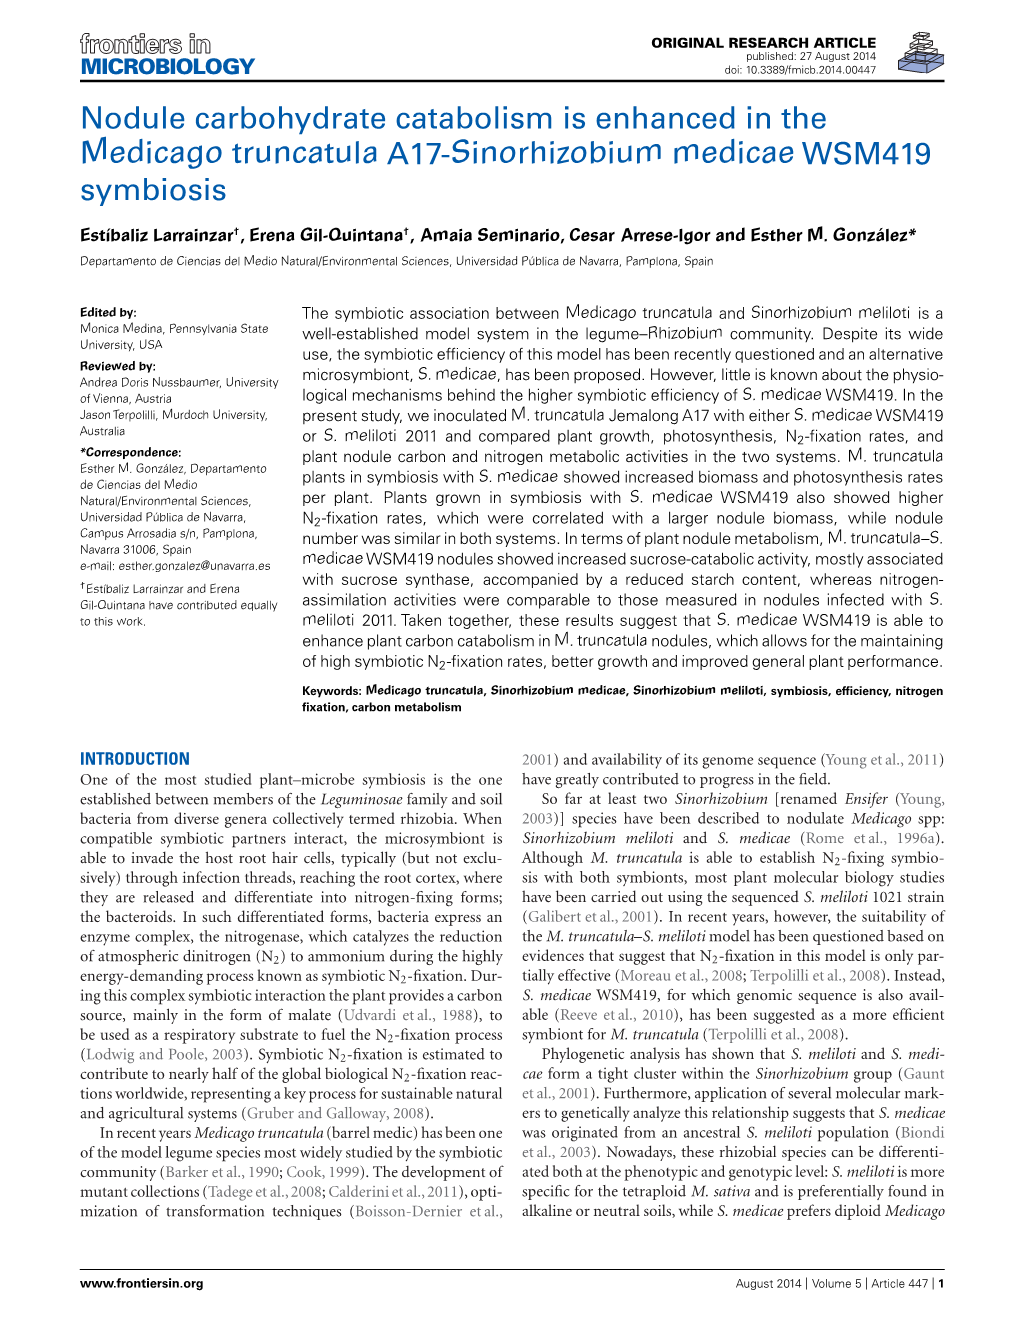 Nodule Carbohydrate Catabolism Is Enhanced in the Medicago Truncatula A17-Sinorhizobium Medicae WSM419 Symbiosis